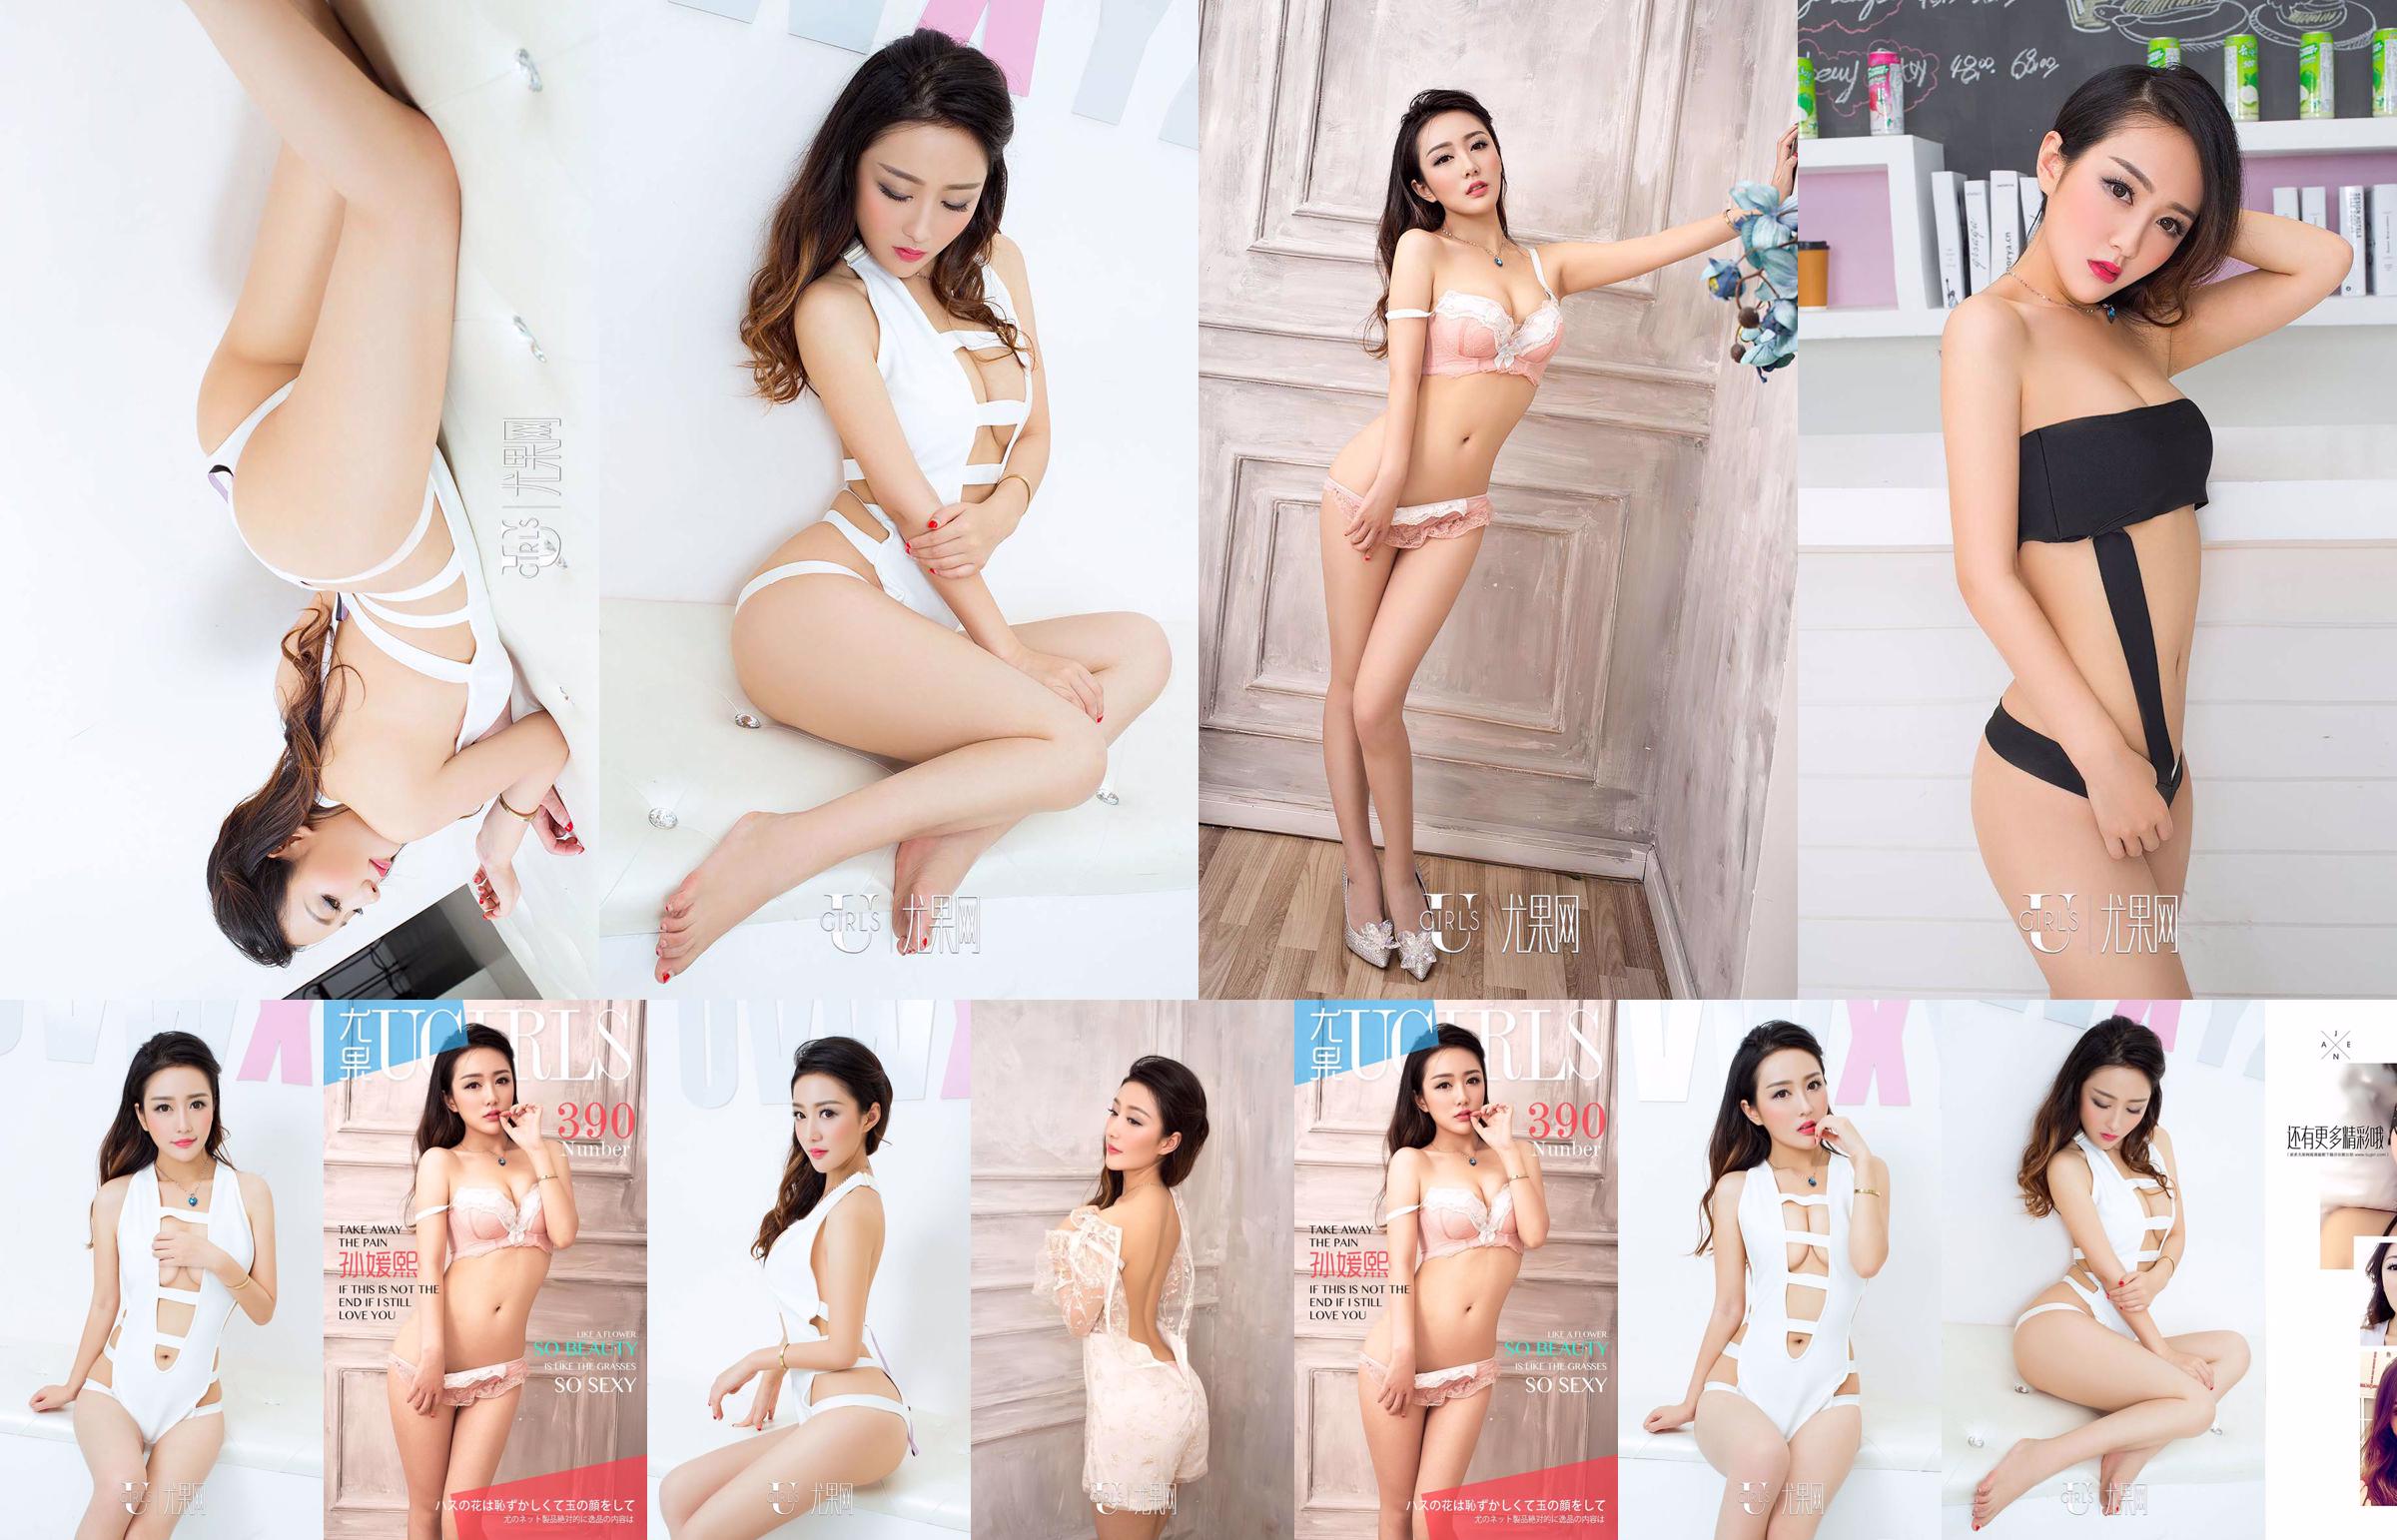 Sun Yuanxi "tão bela tão sexy" [爱 优 物 Ugirls] No.390 No.f059cc Página 2